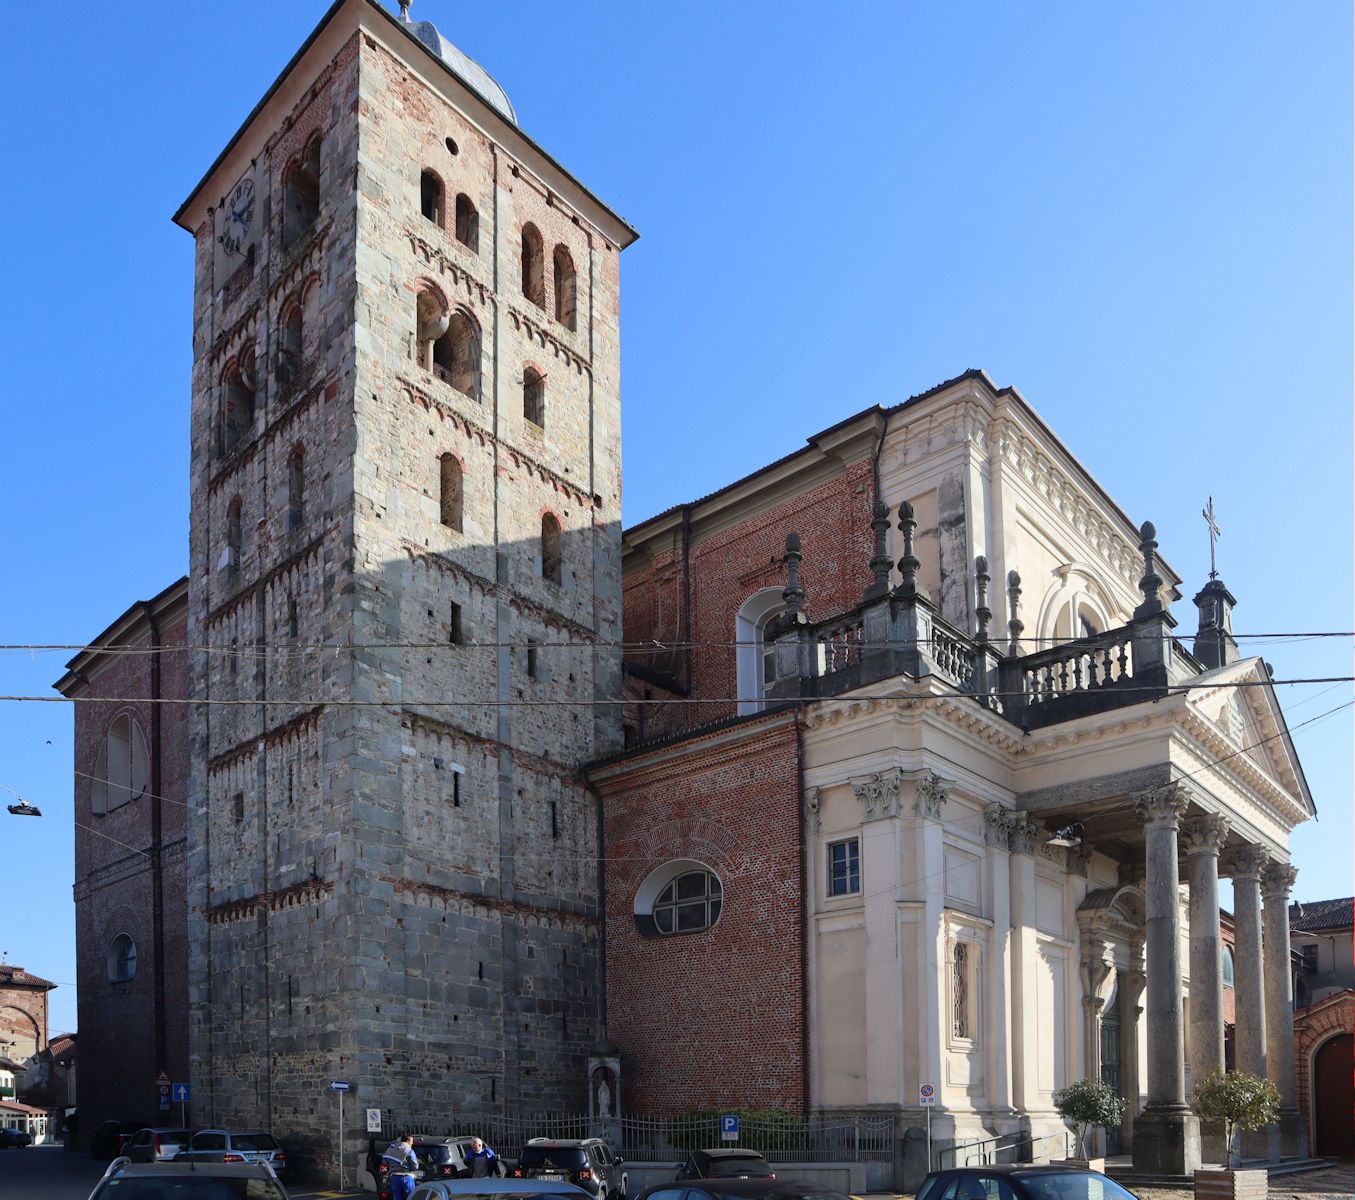 ehemalige Abtei Fruttuaria in San Benigno Canavese